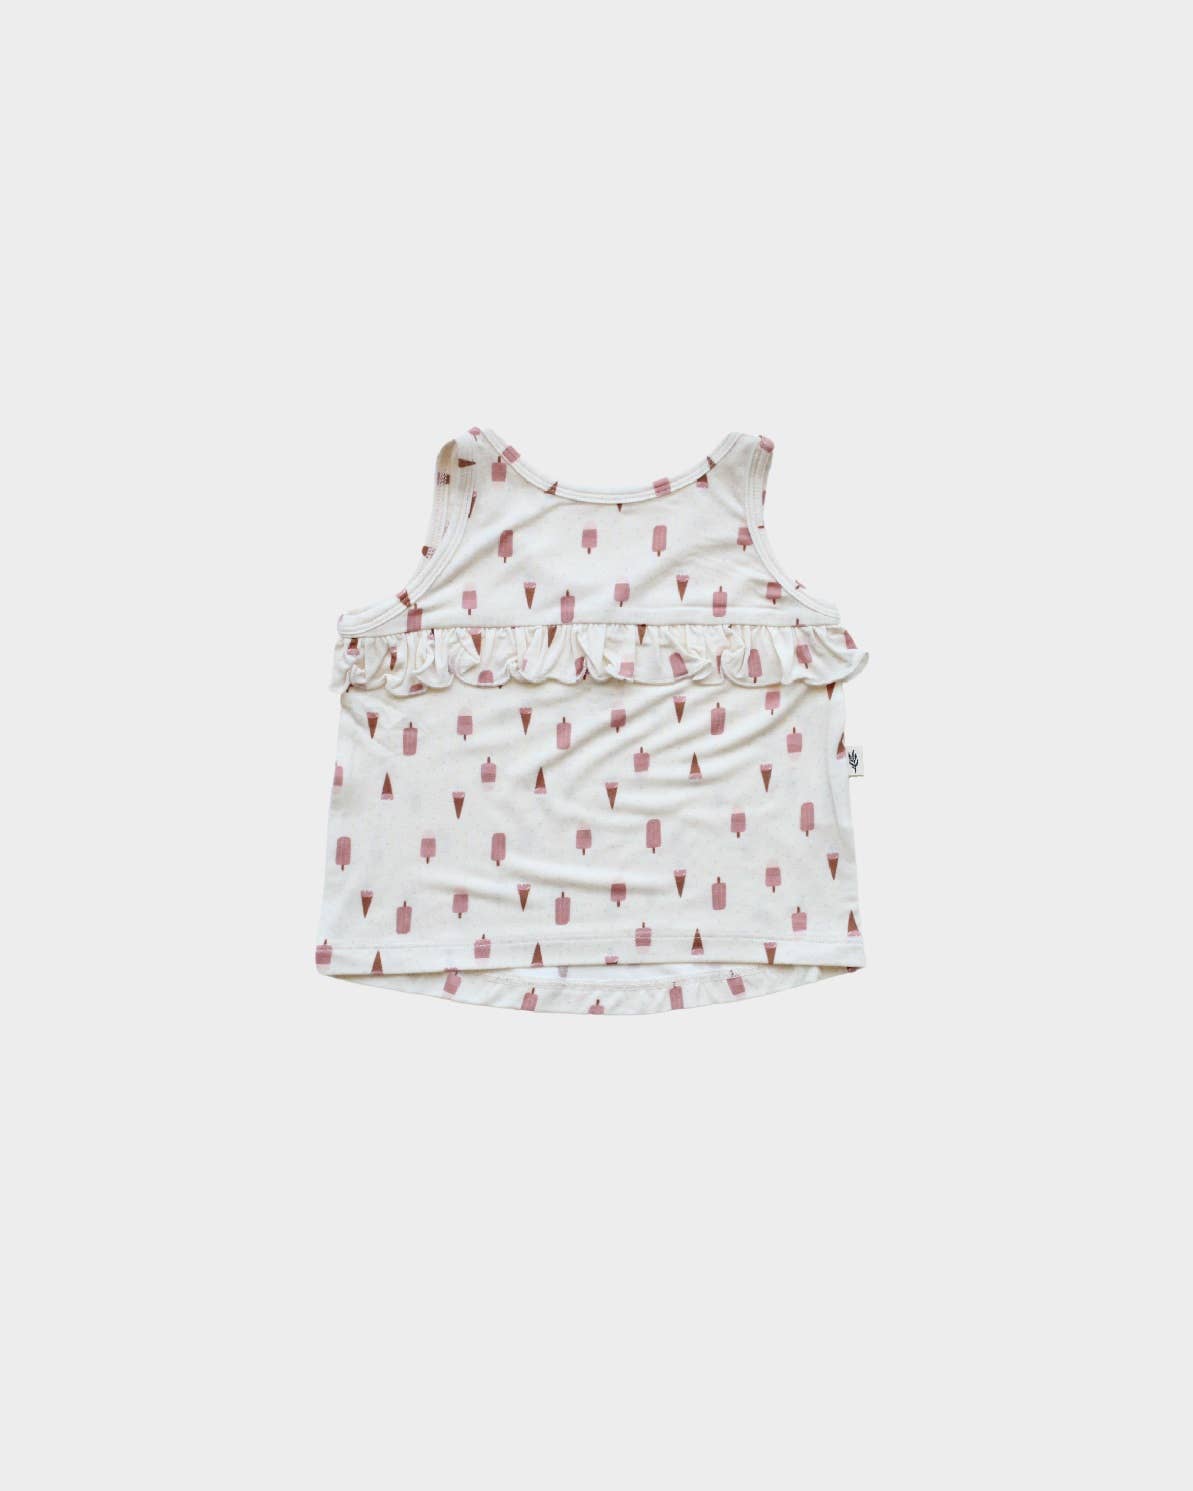 babysprouts clothing company - S23 D2: Girl's Ruffle Tank in Summer Treats - kennethodaniel